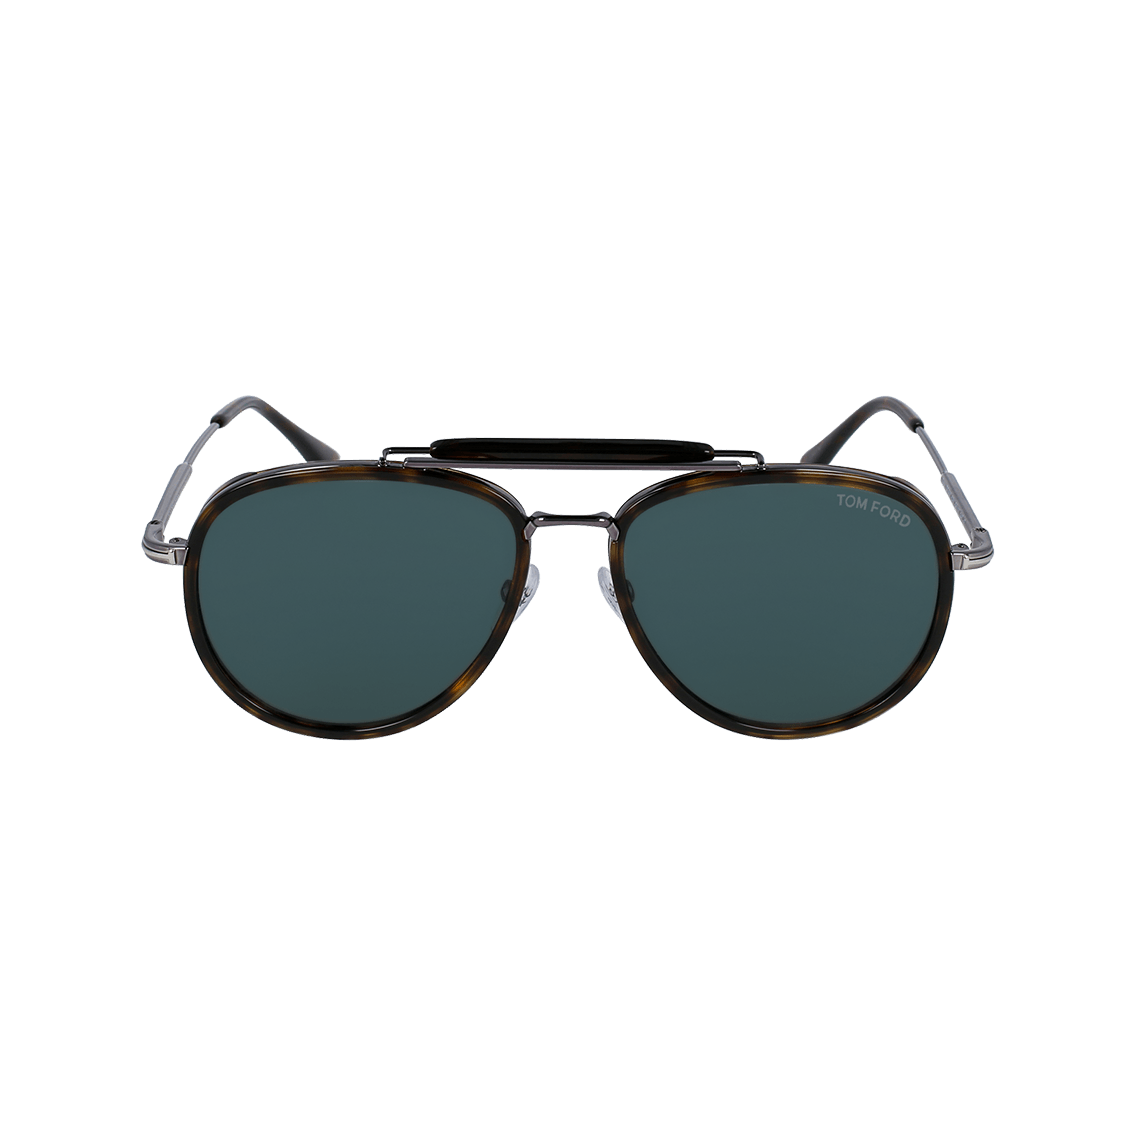 Tom Ford Sunglasses Tom Ford Sunglasses FT0666 52N 60mm Tripp Eyeglasses Eyewear UK USA Australia 